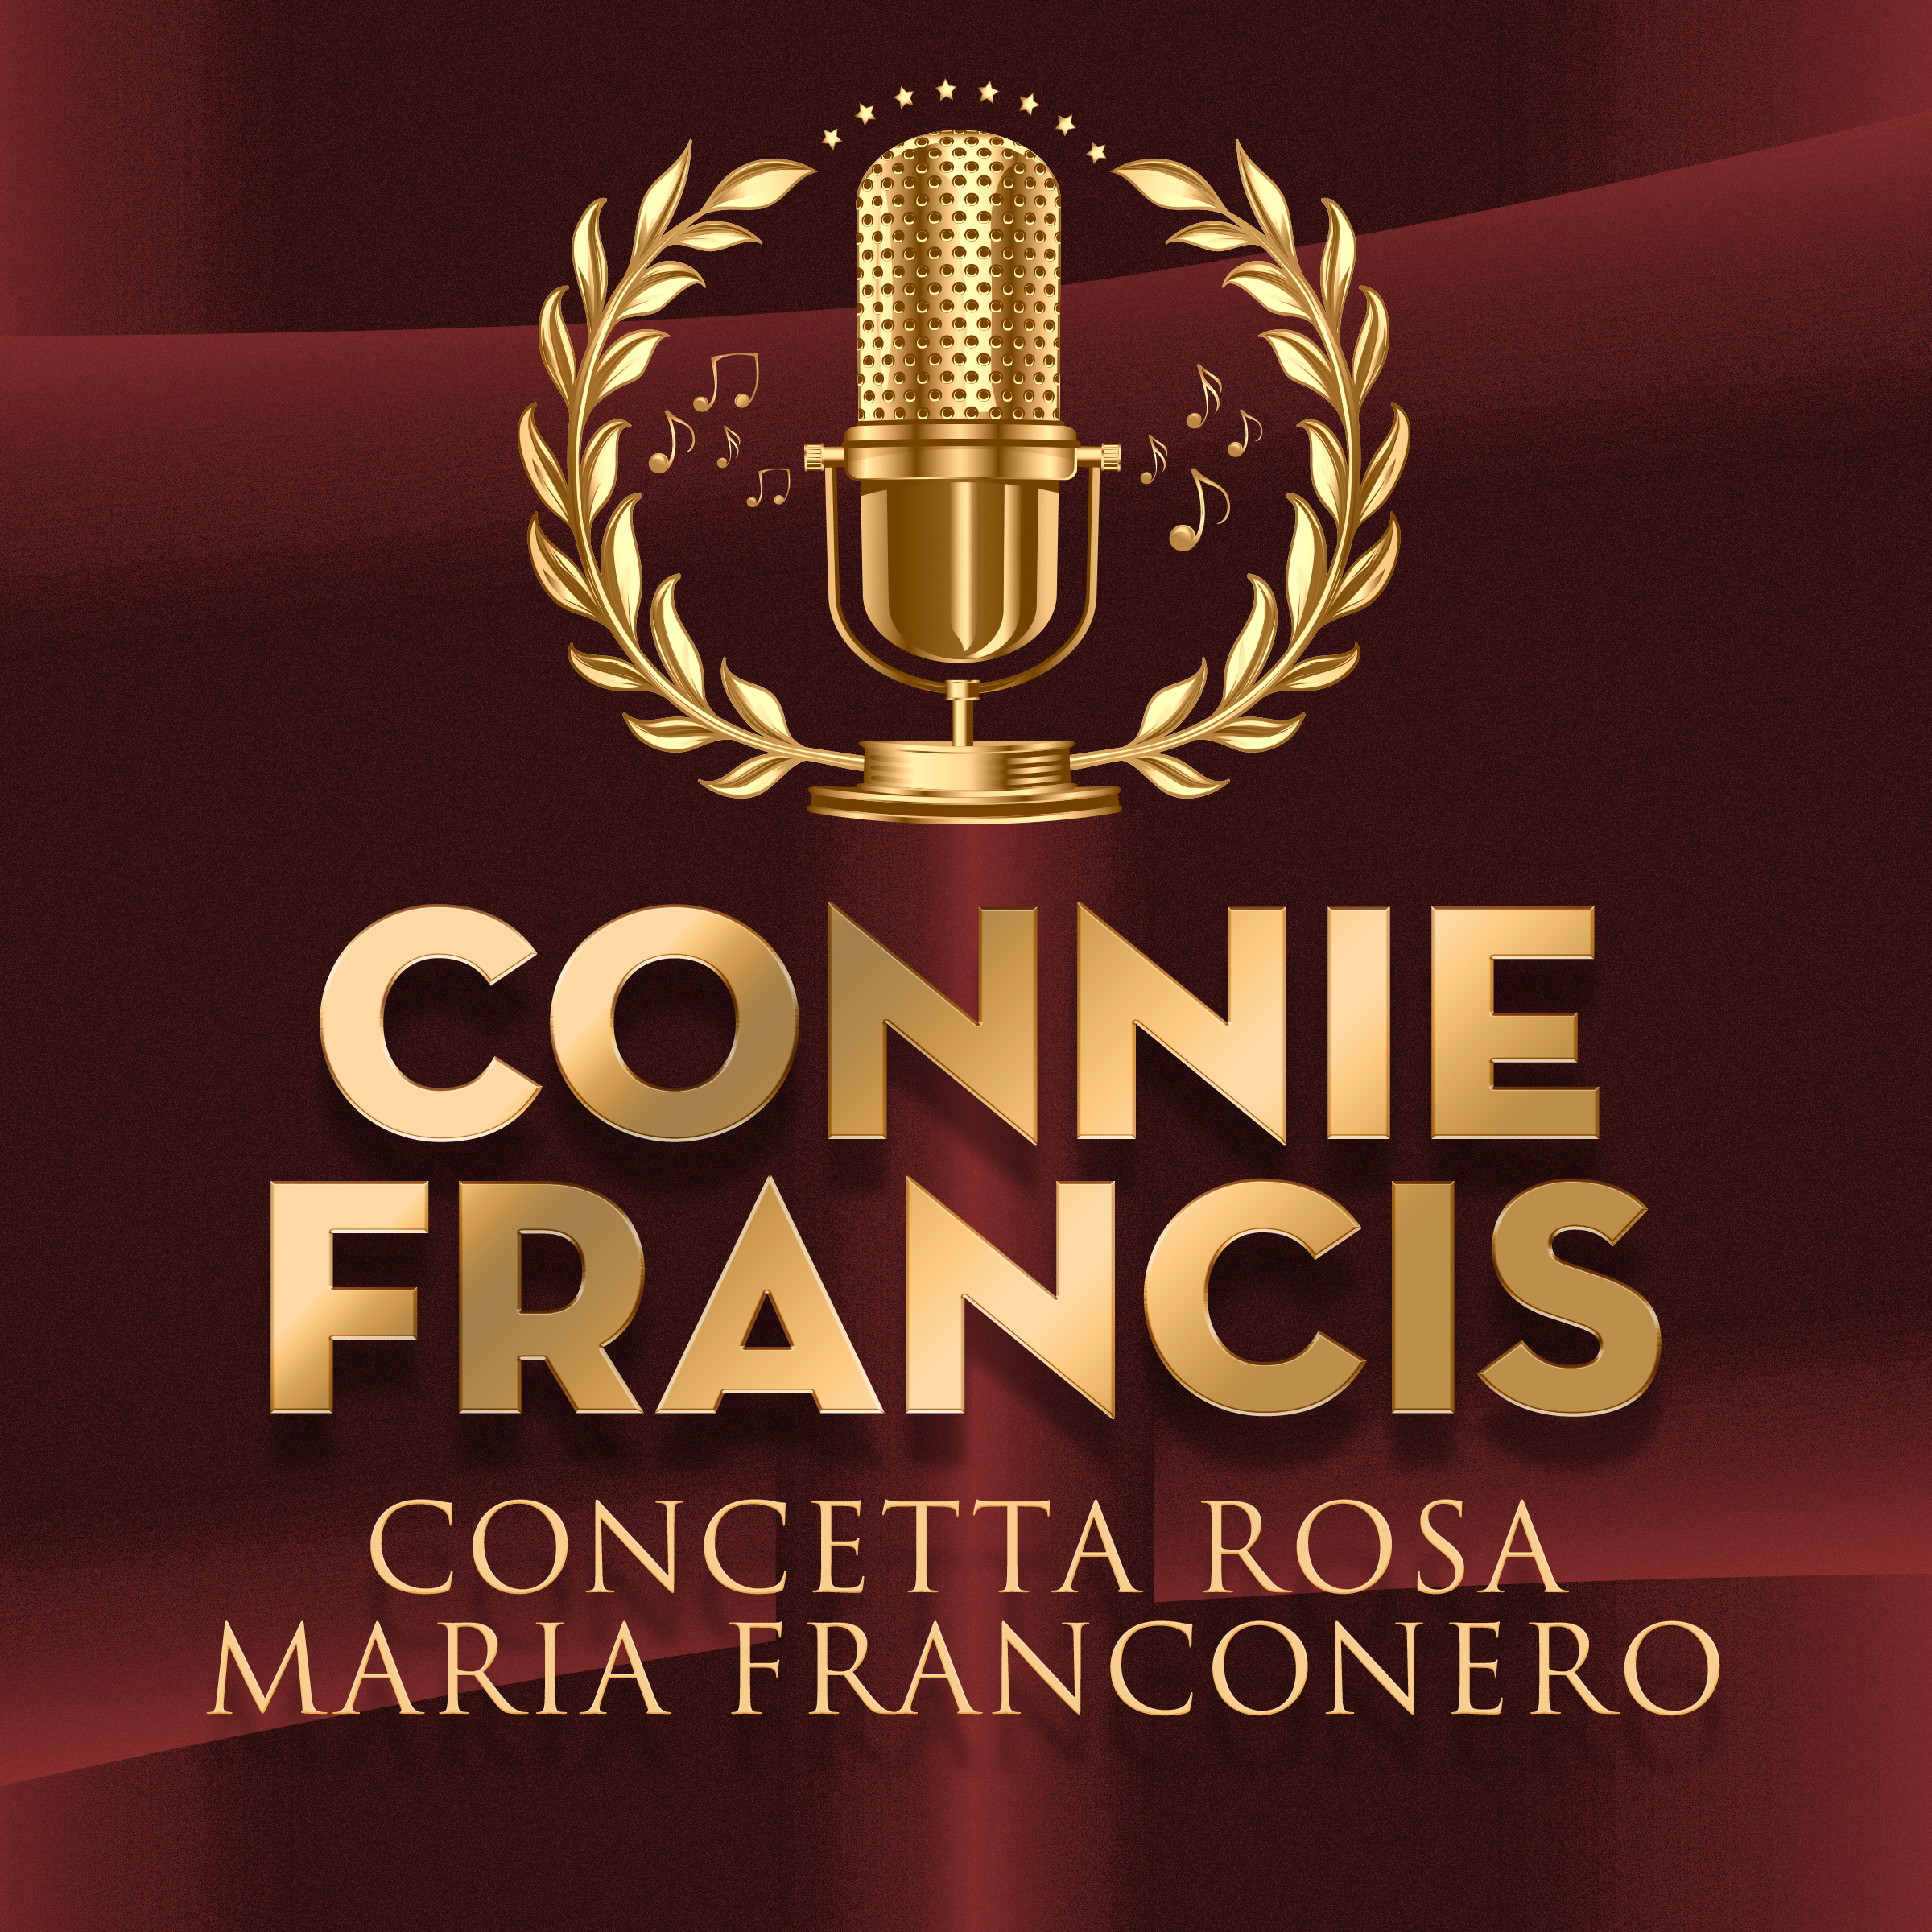 Concetta Rosa Maria Franconero